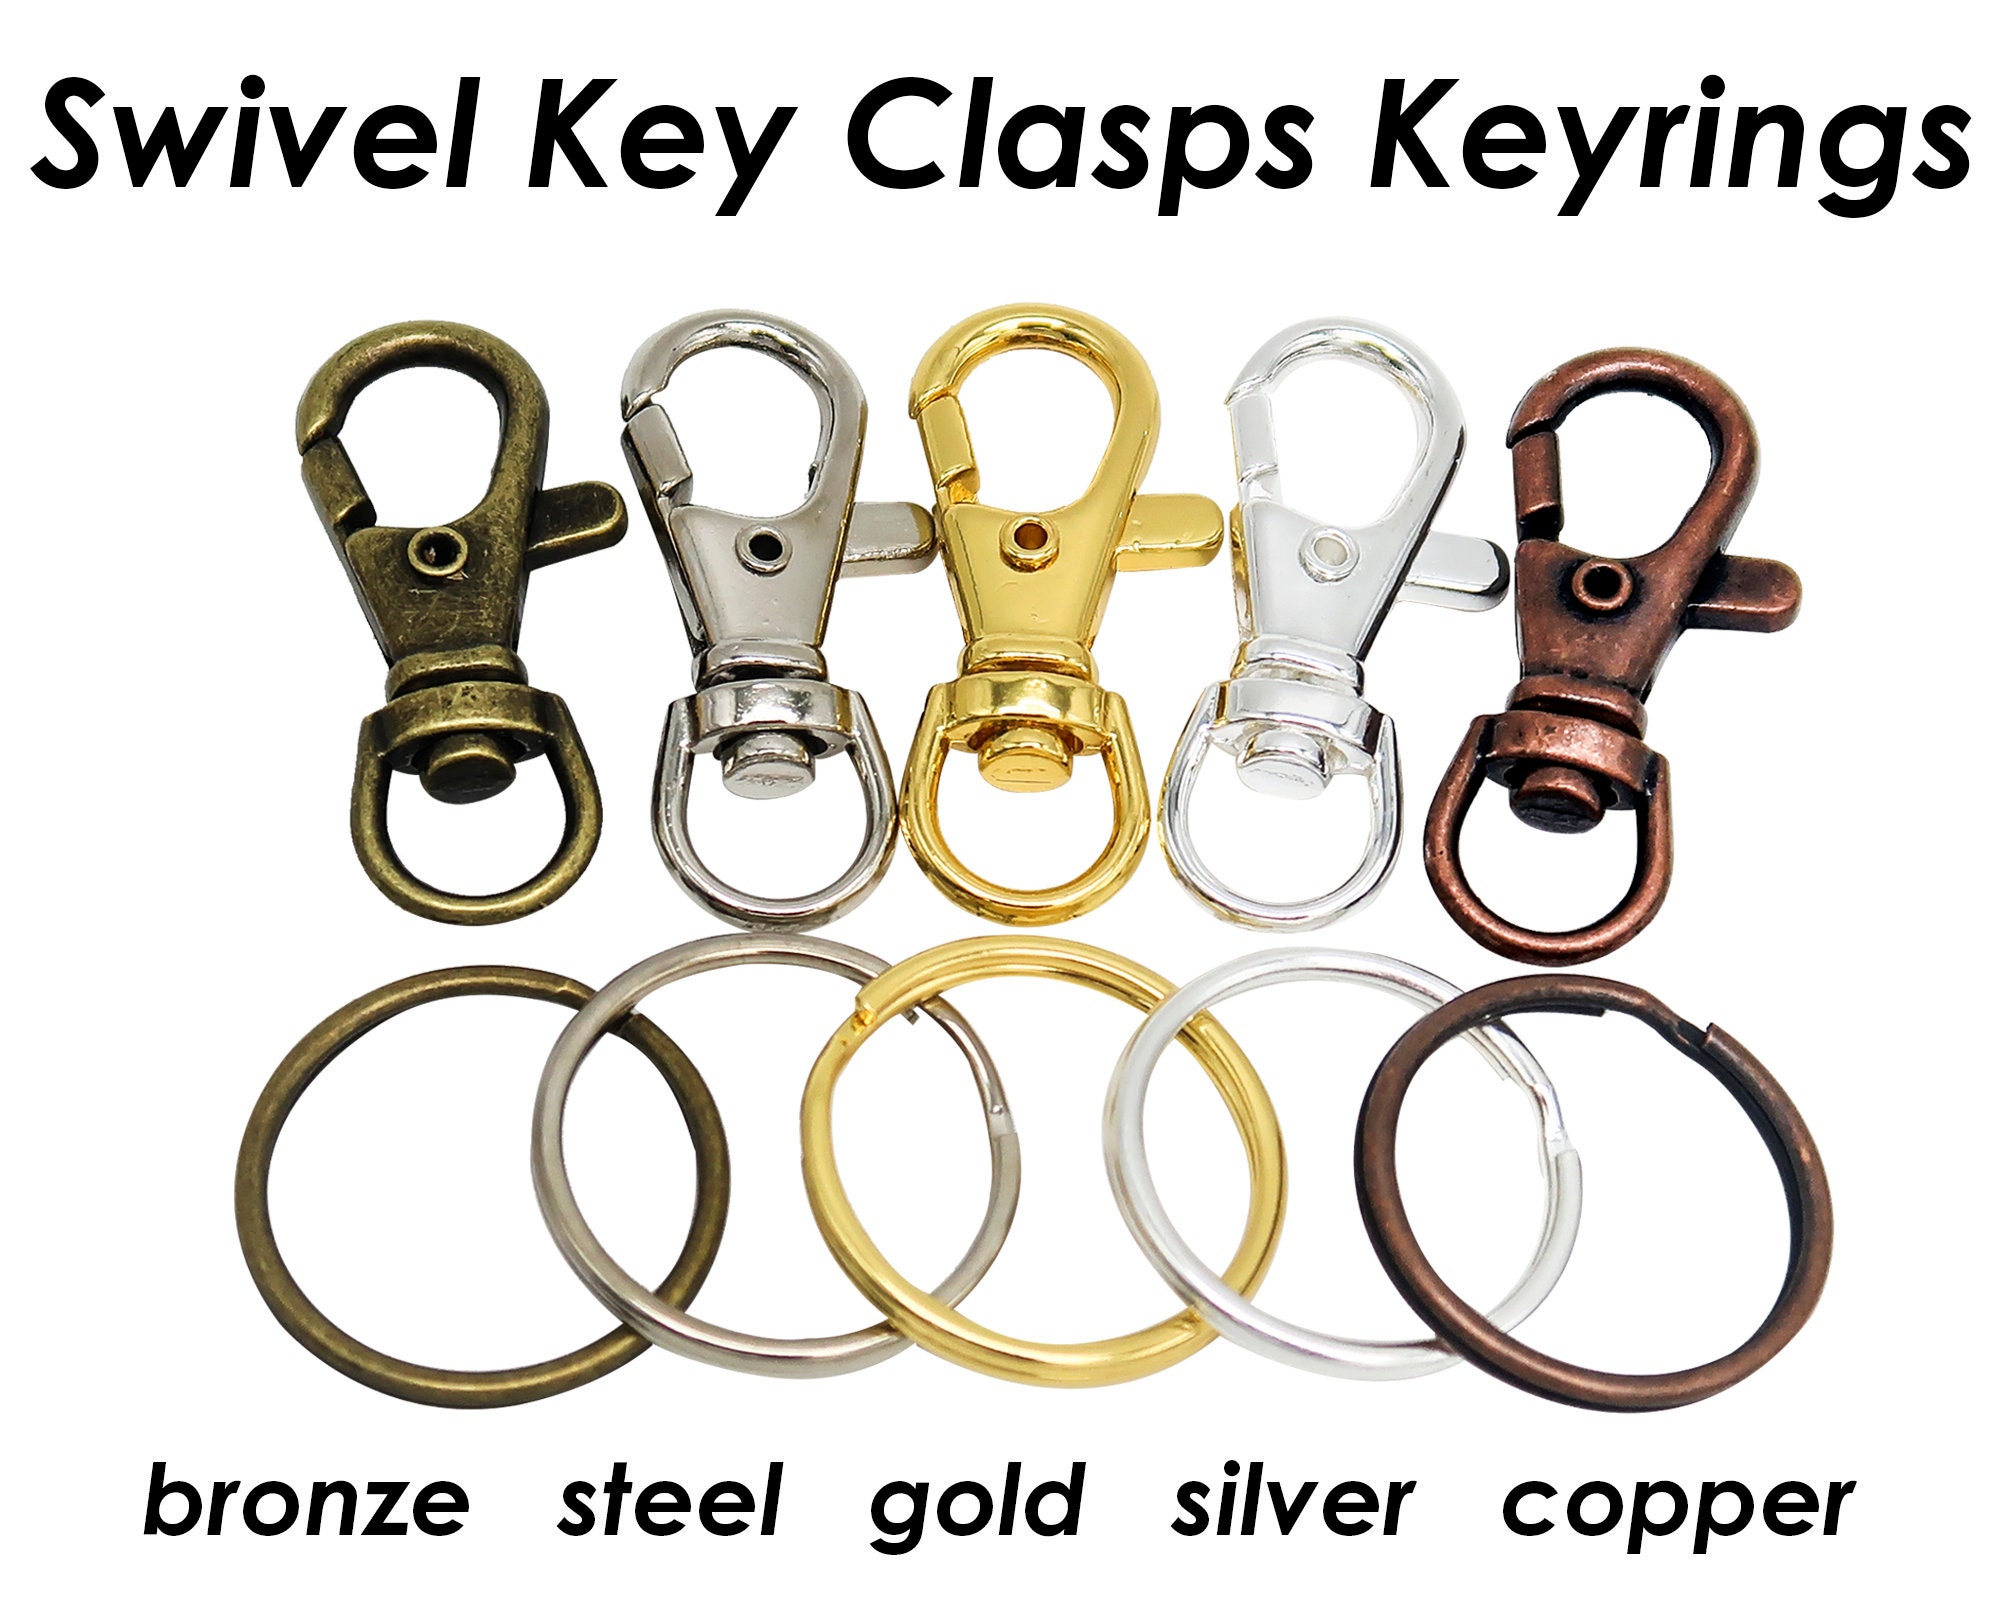 Cork Key Chain with Swivel Hook Clasp